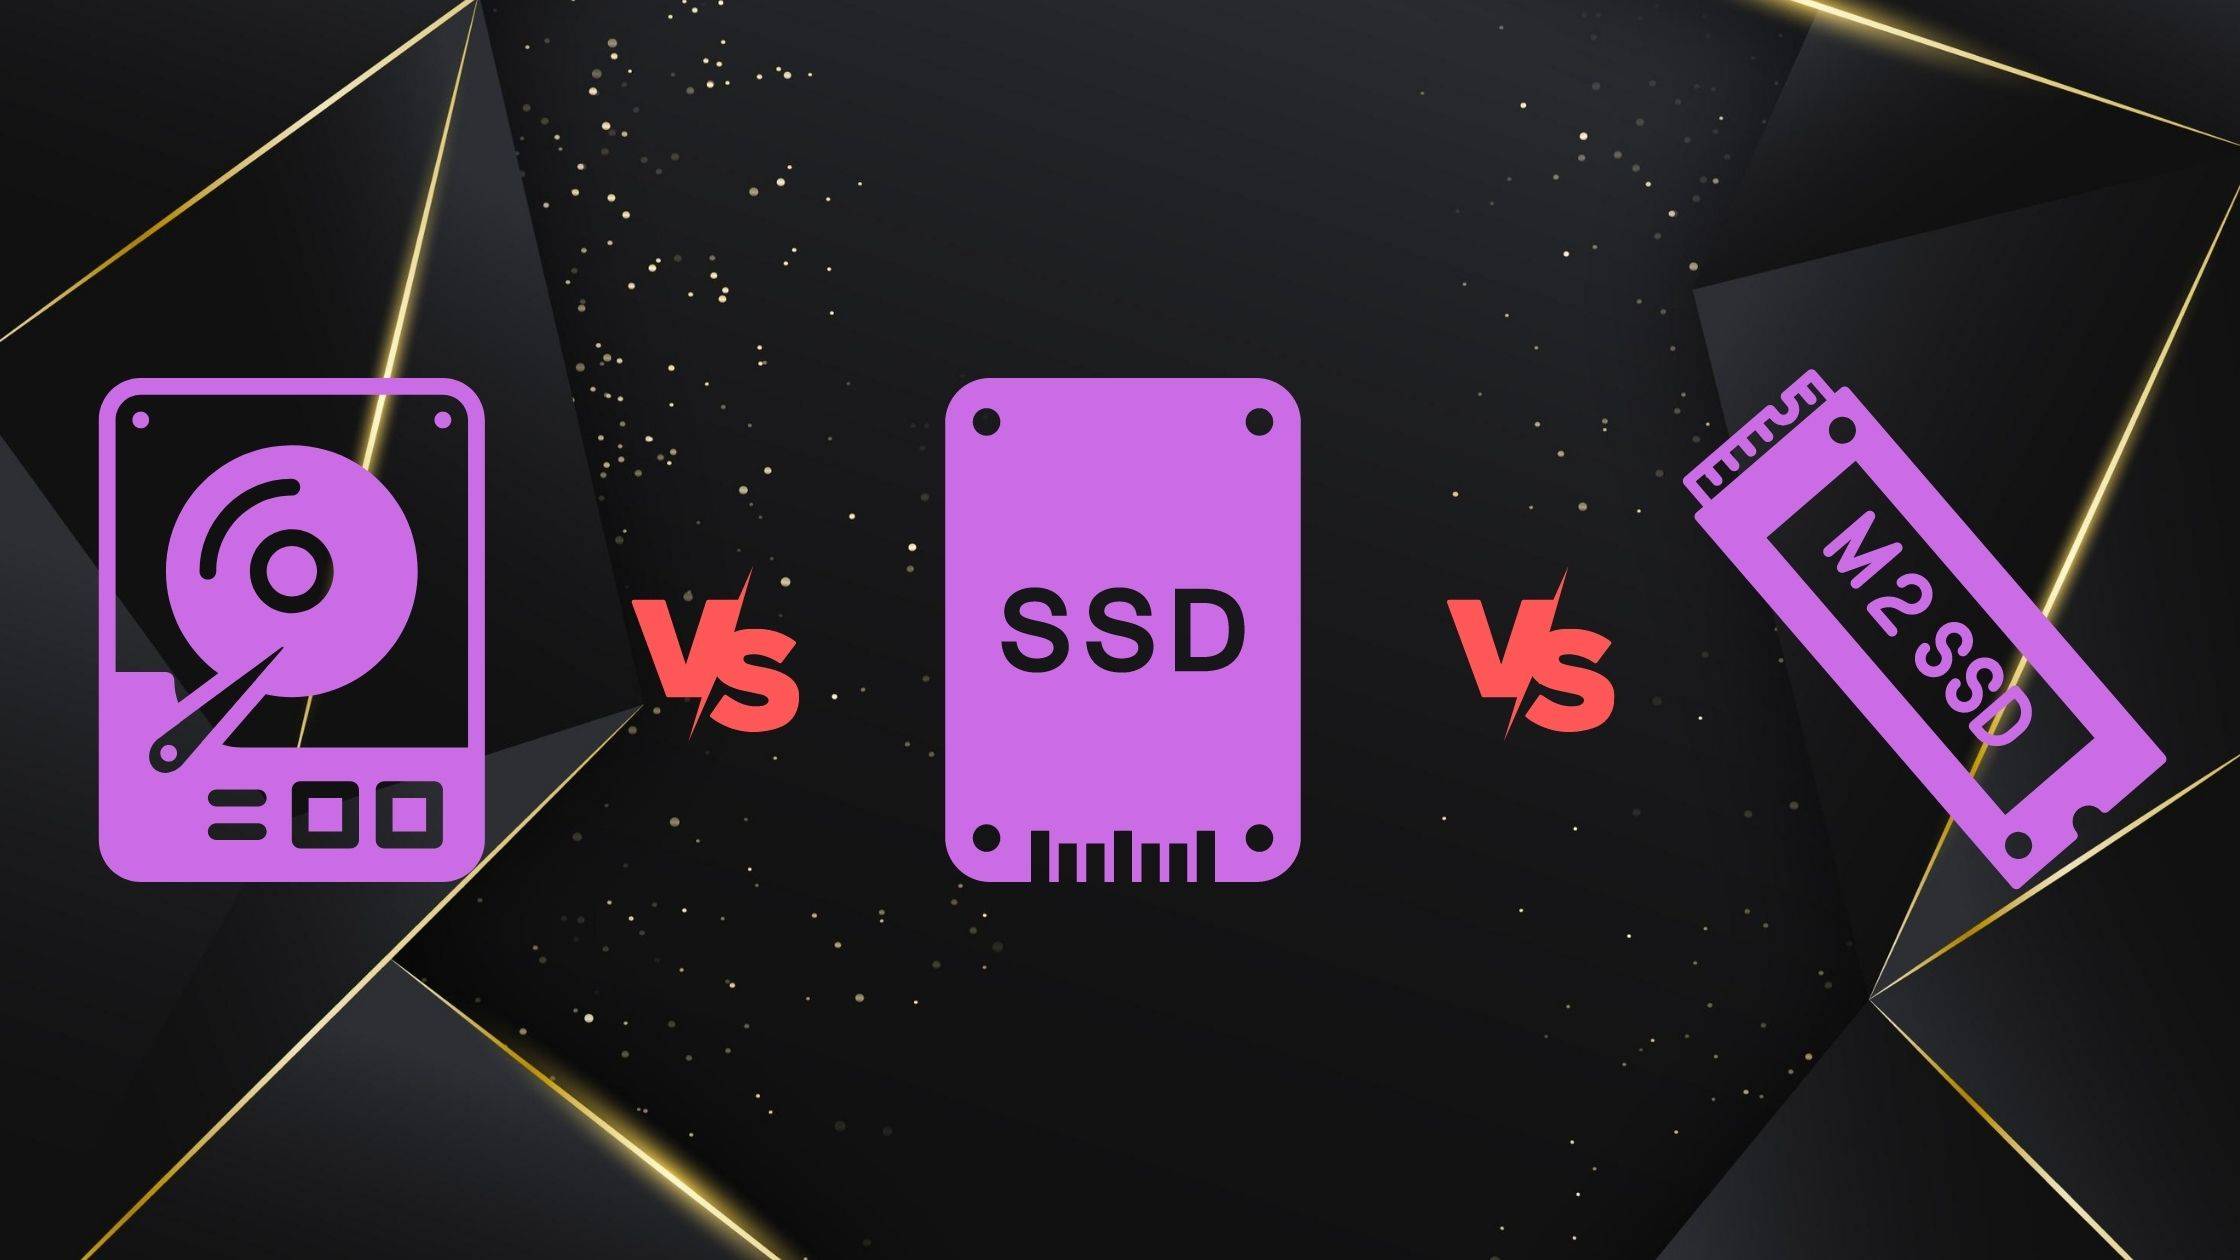 NVMe SSD vs. SATA SSD vs. HDD